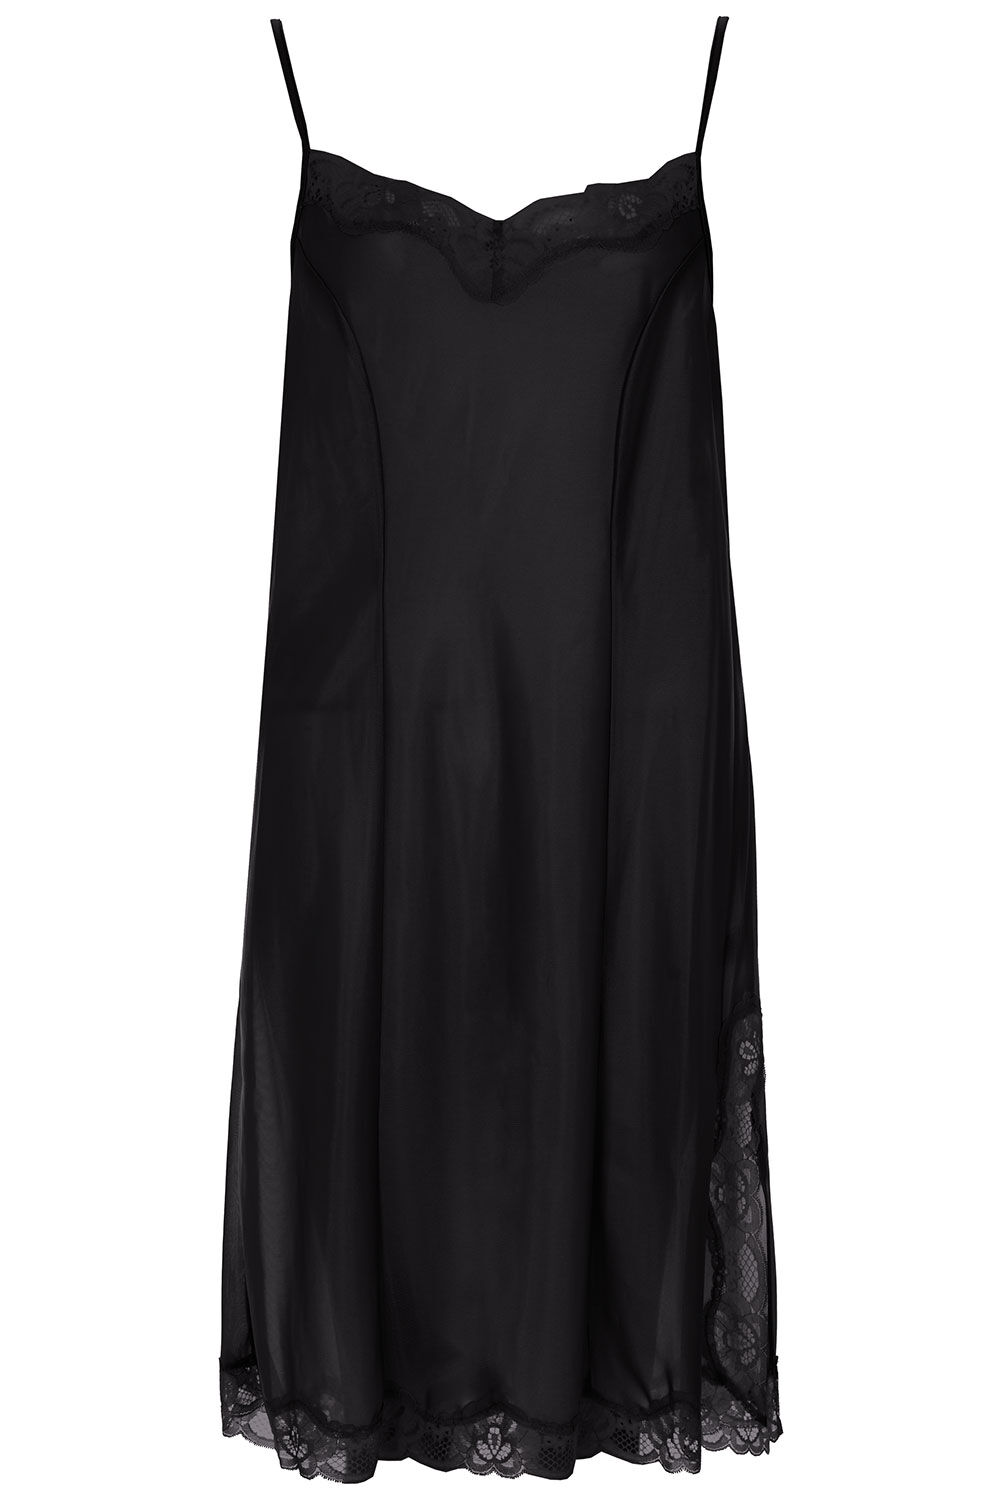 Lady Linen Cotton Full Slip Dress Strappy Petticoat Chemise Nightie Solid  Casual | eBay